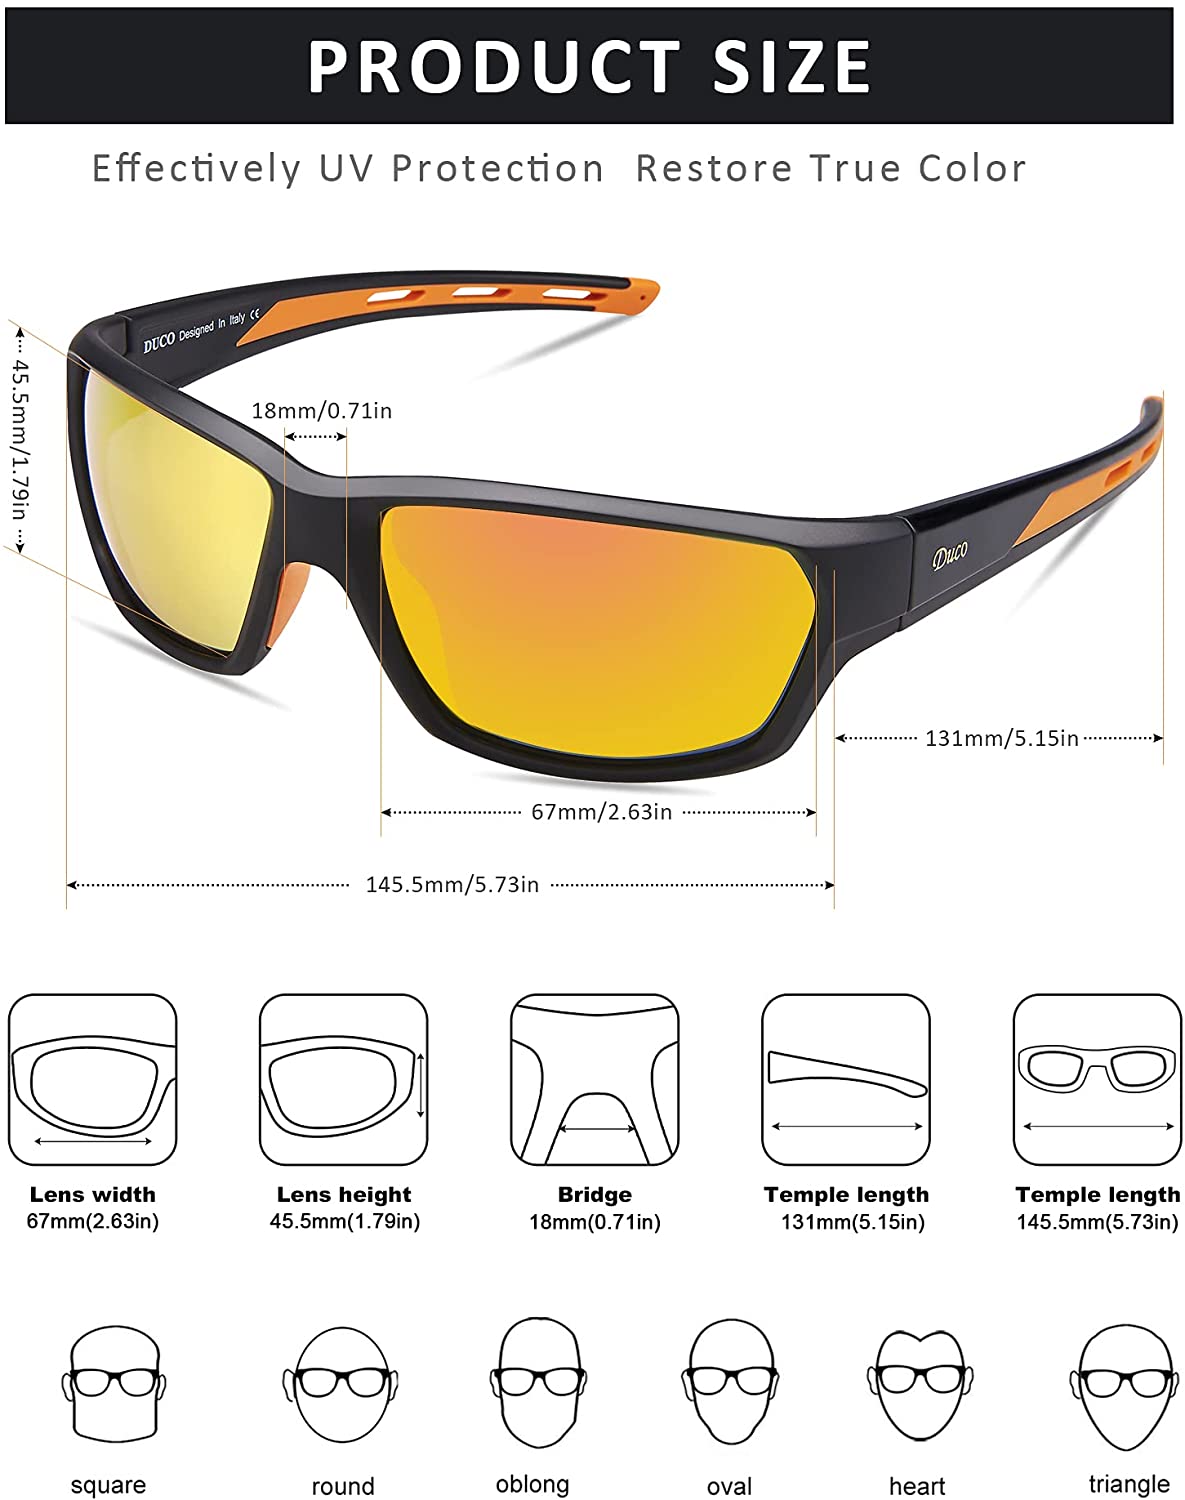 Sports Polarized Sunglasses Men Women Lightweight UV Protection Glasses